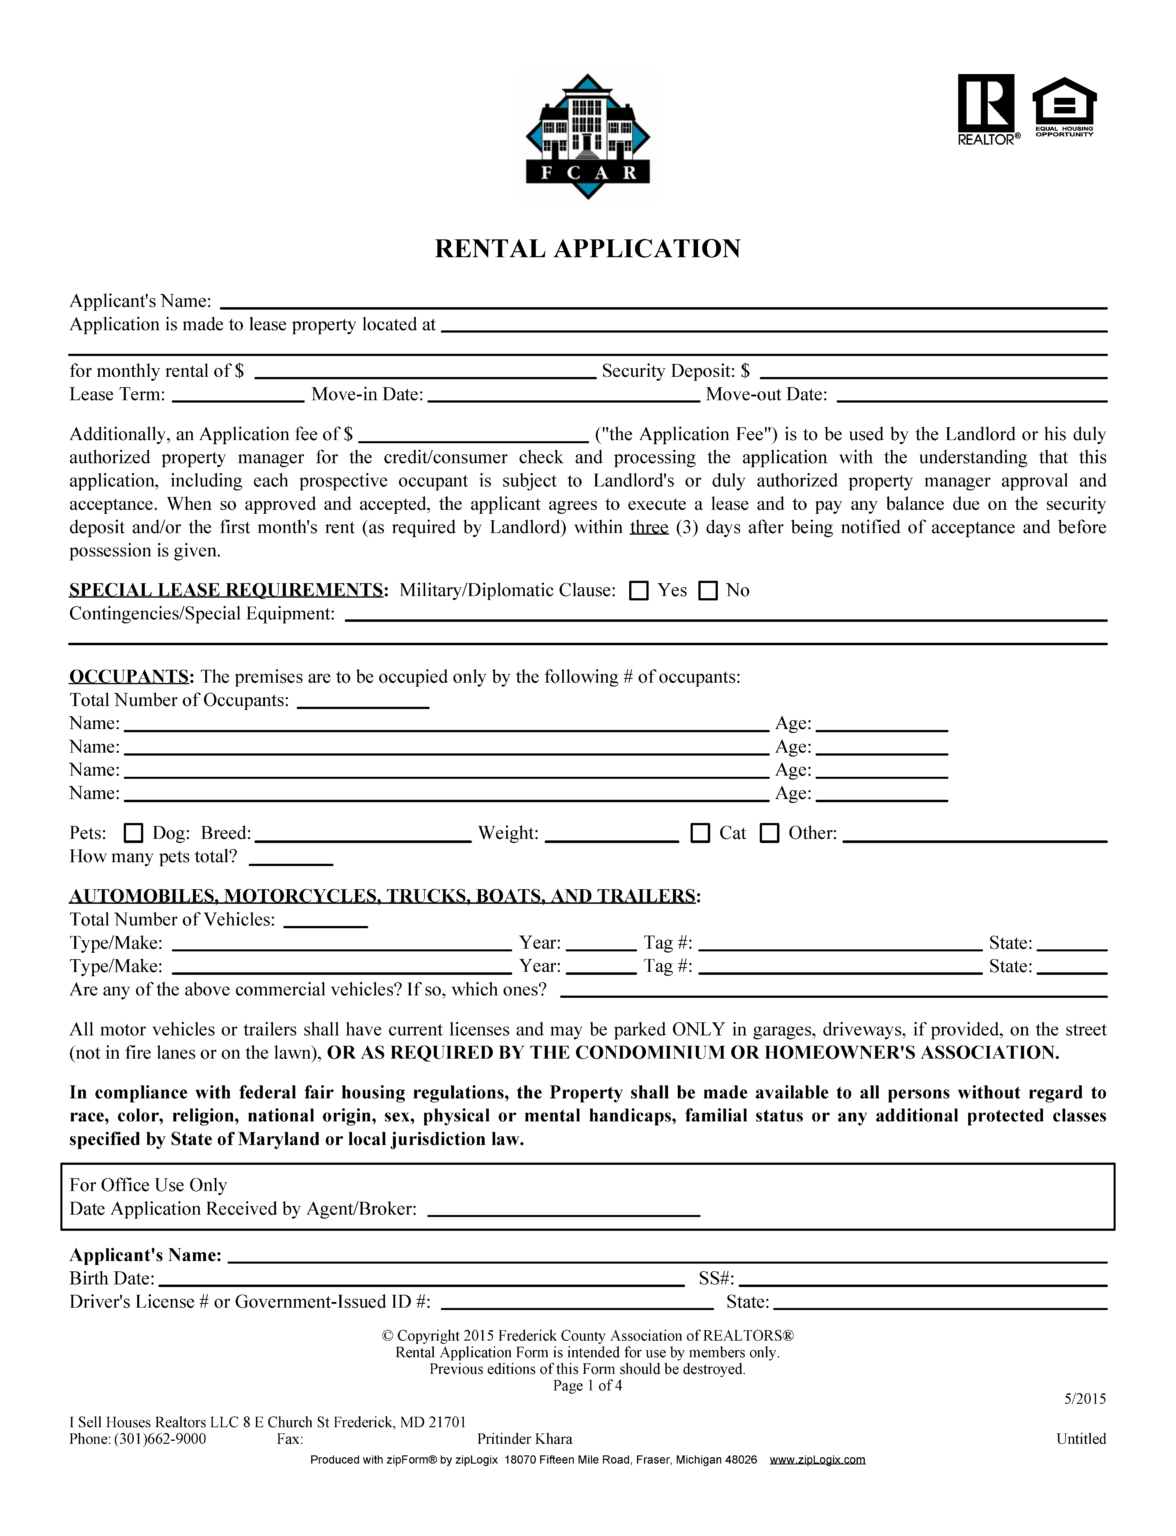 free-maryland-rental-application-form-pdf-word